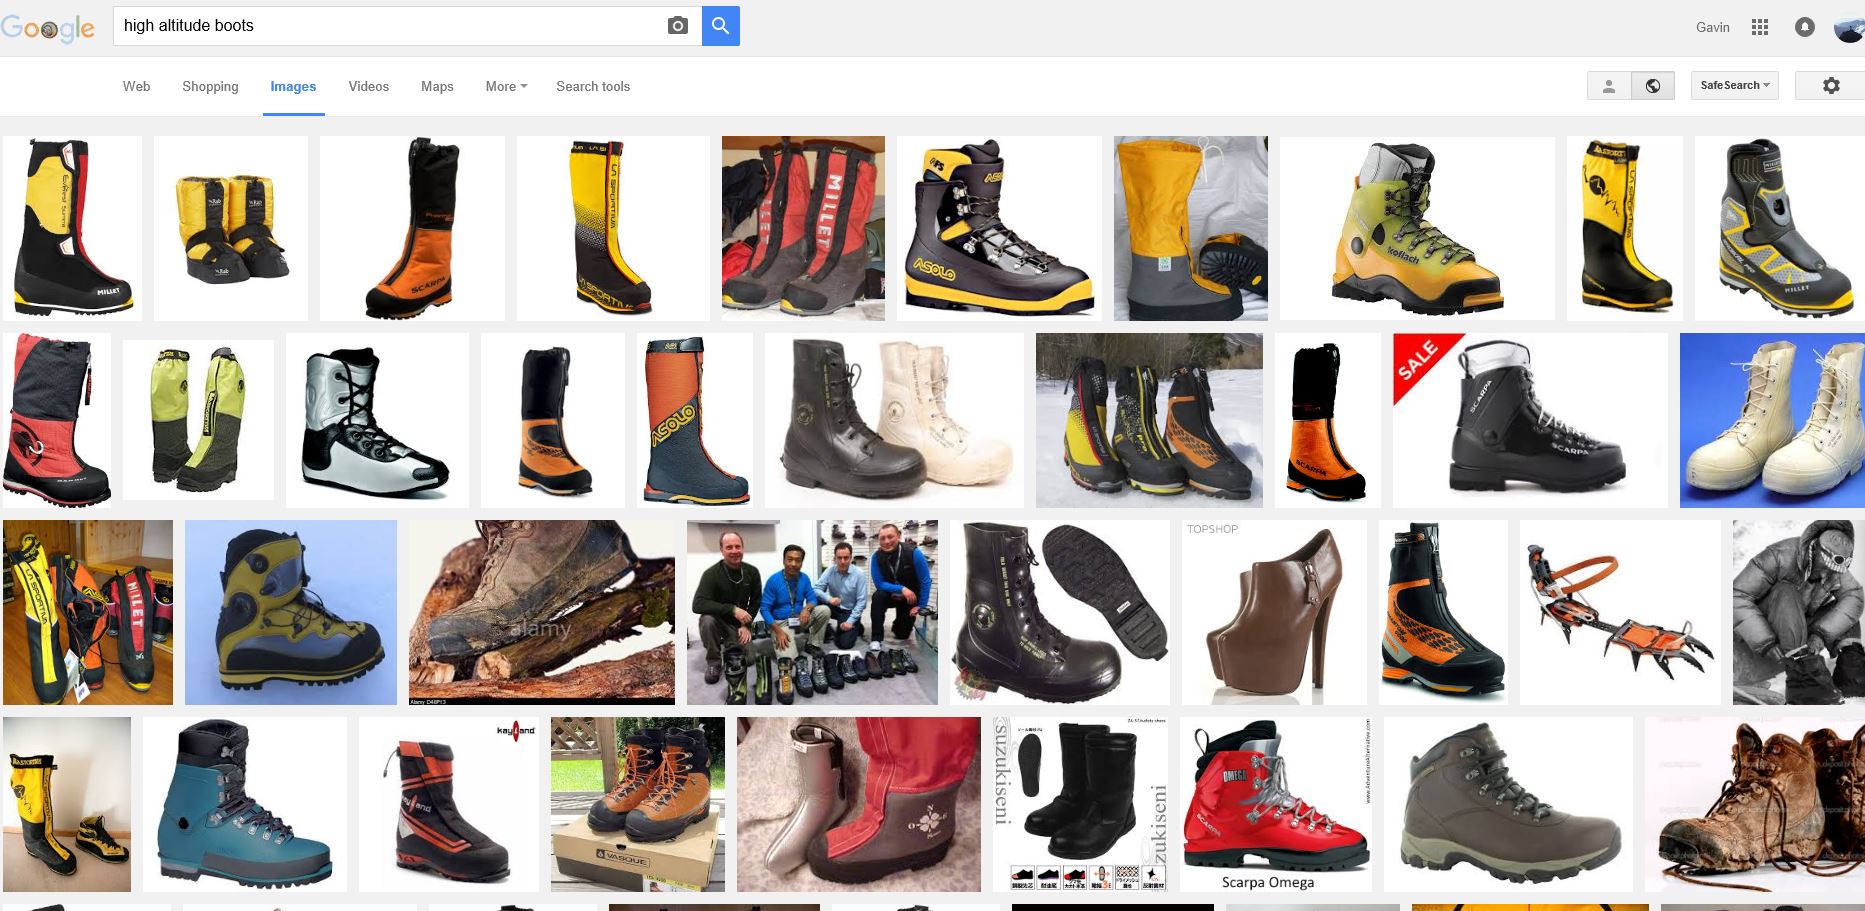 Choosing high altitude boots 